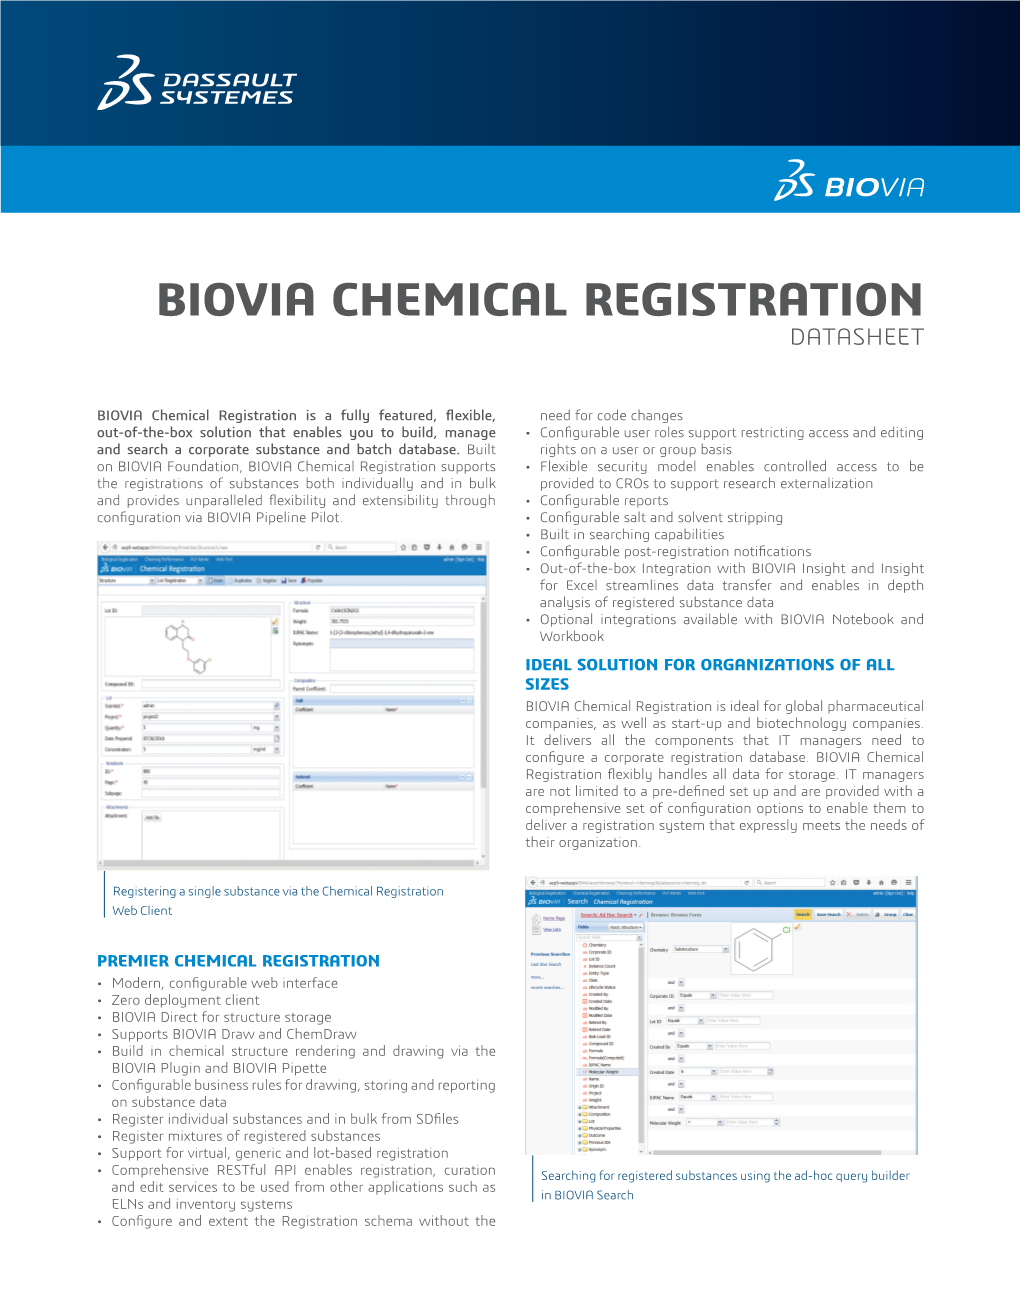 Biovia Chemical Registration Datasheet